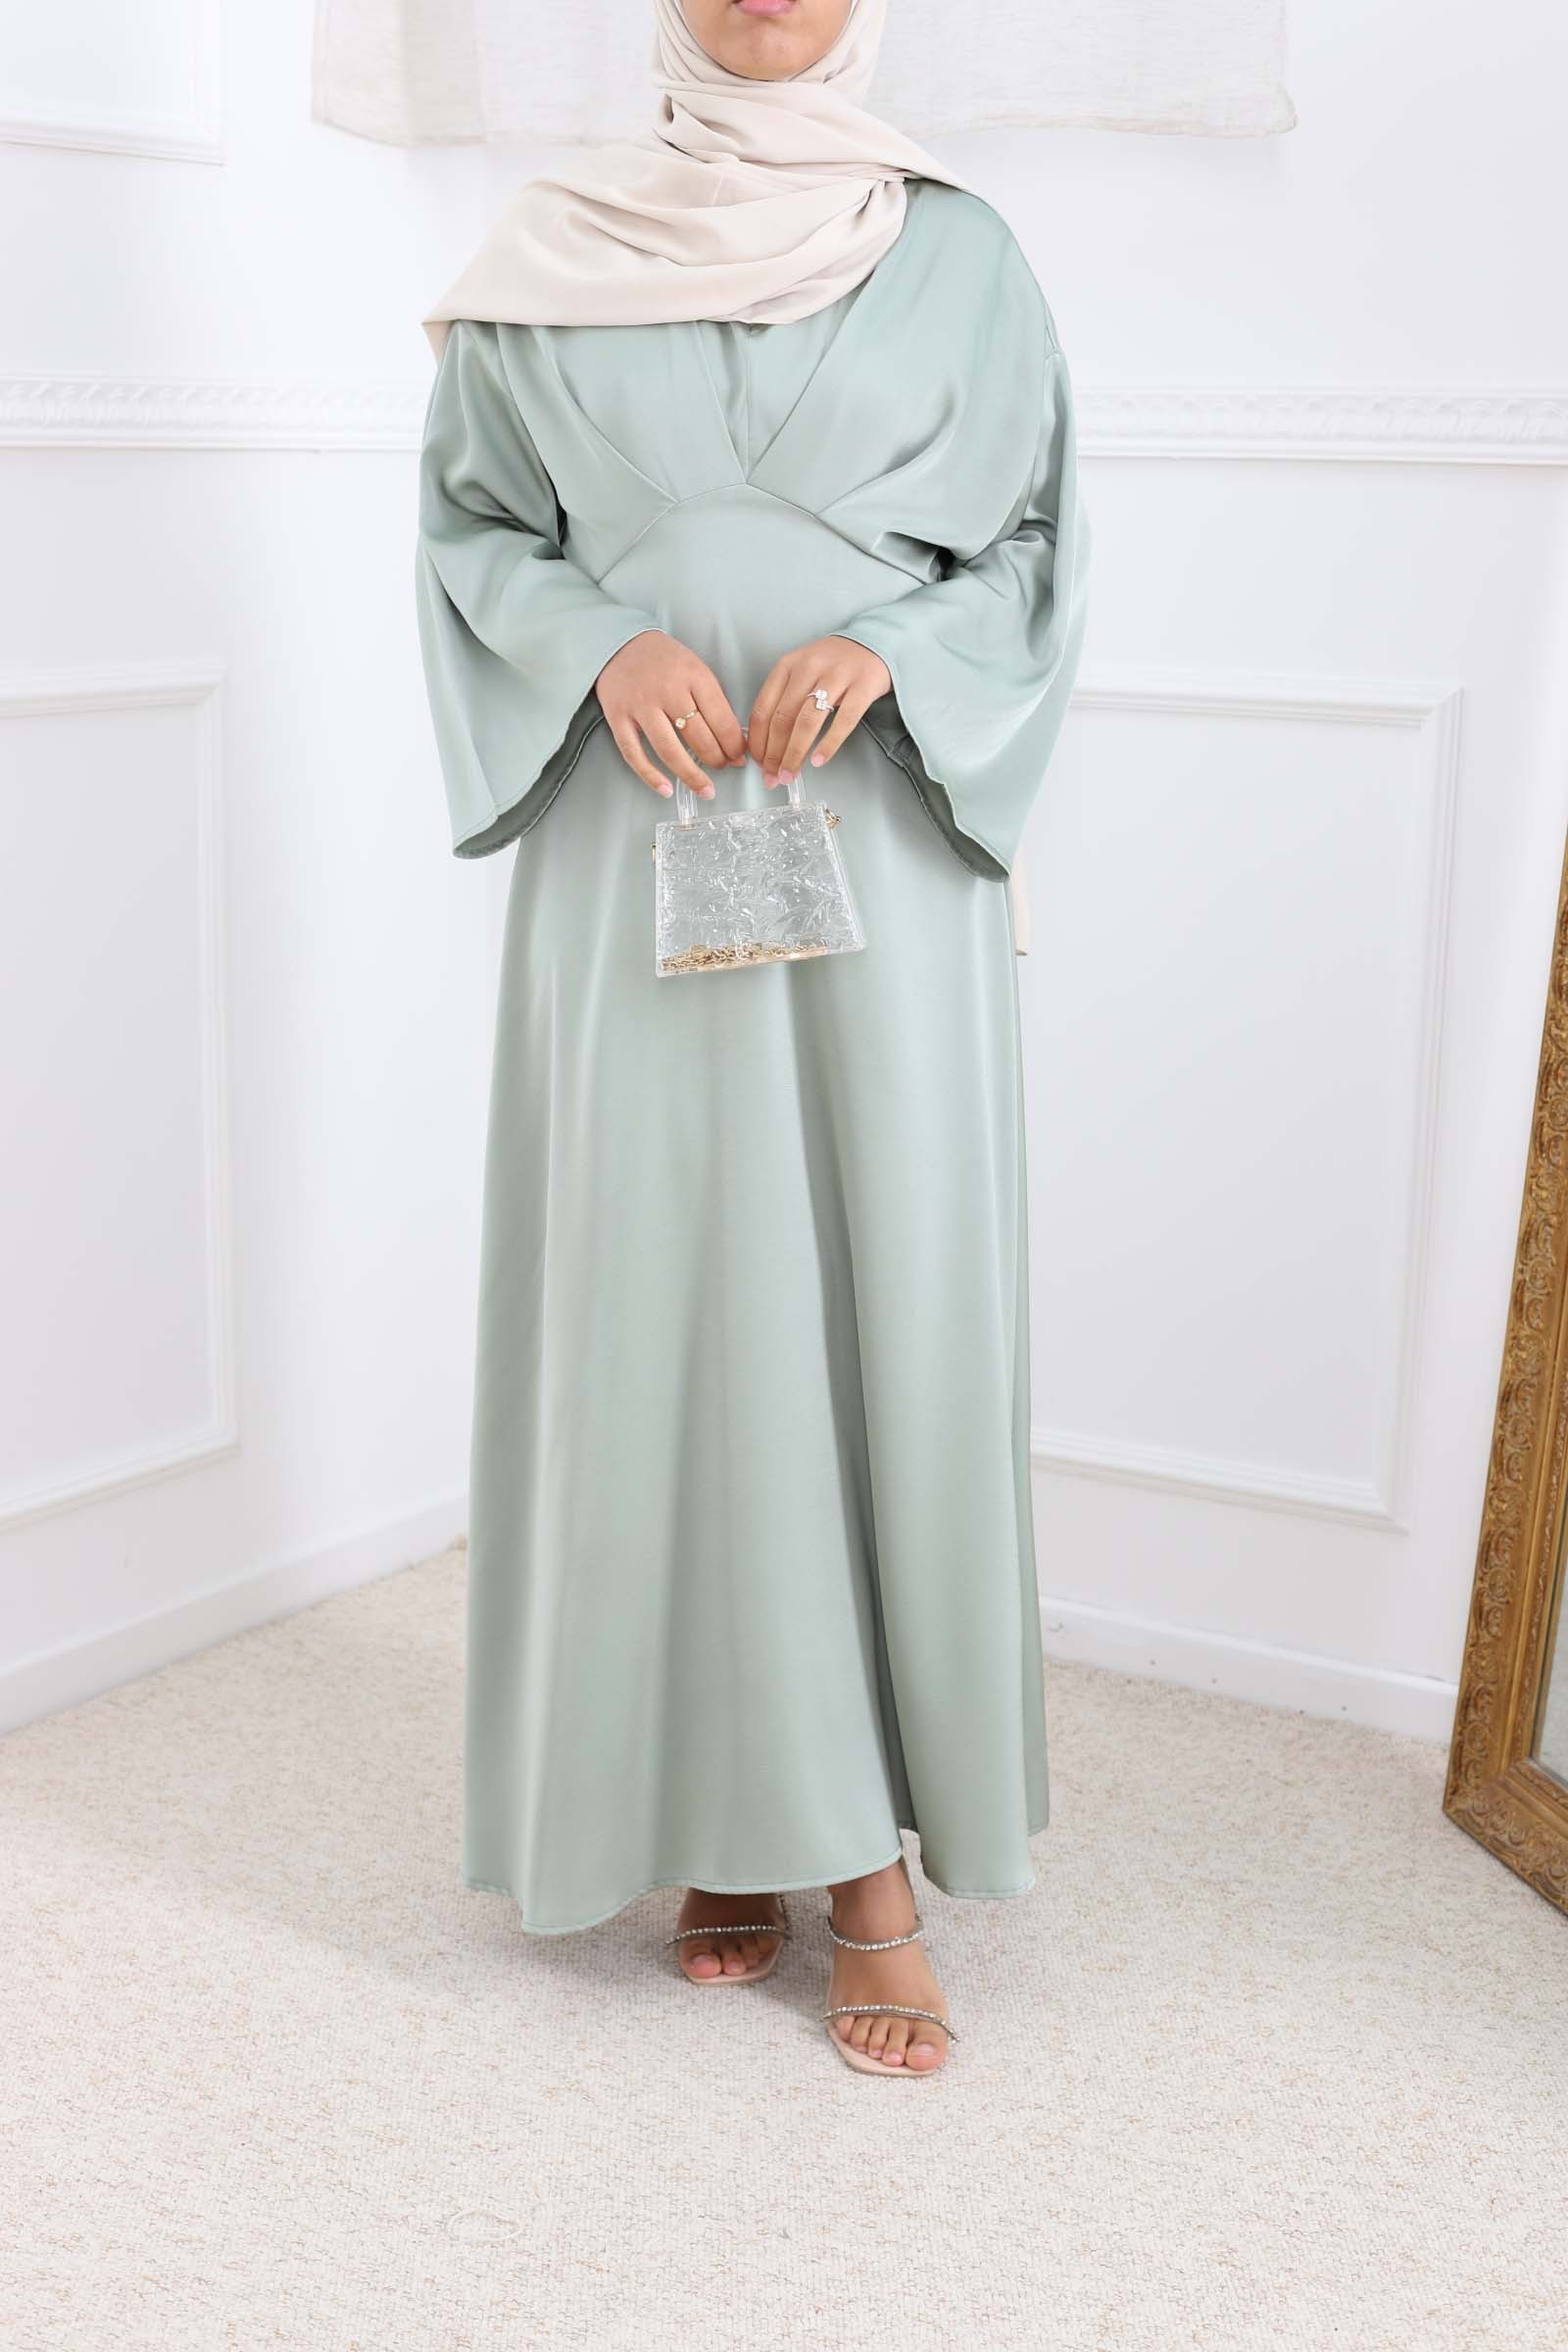 Robe de soirée femme musulmane , hijab fete